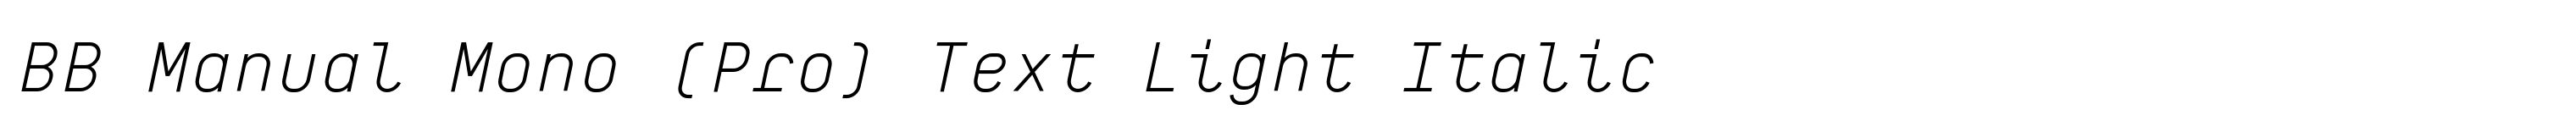 BB Manual Mono (Pro) Text Light Italic